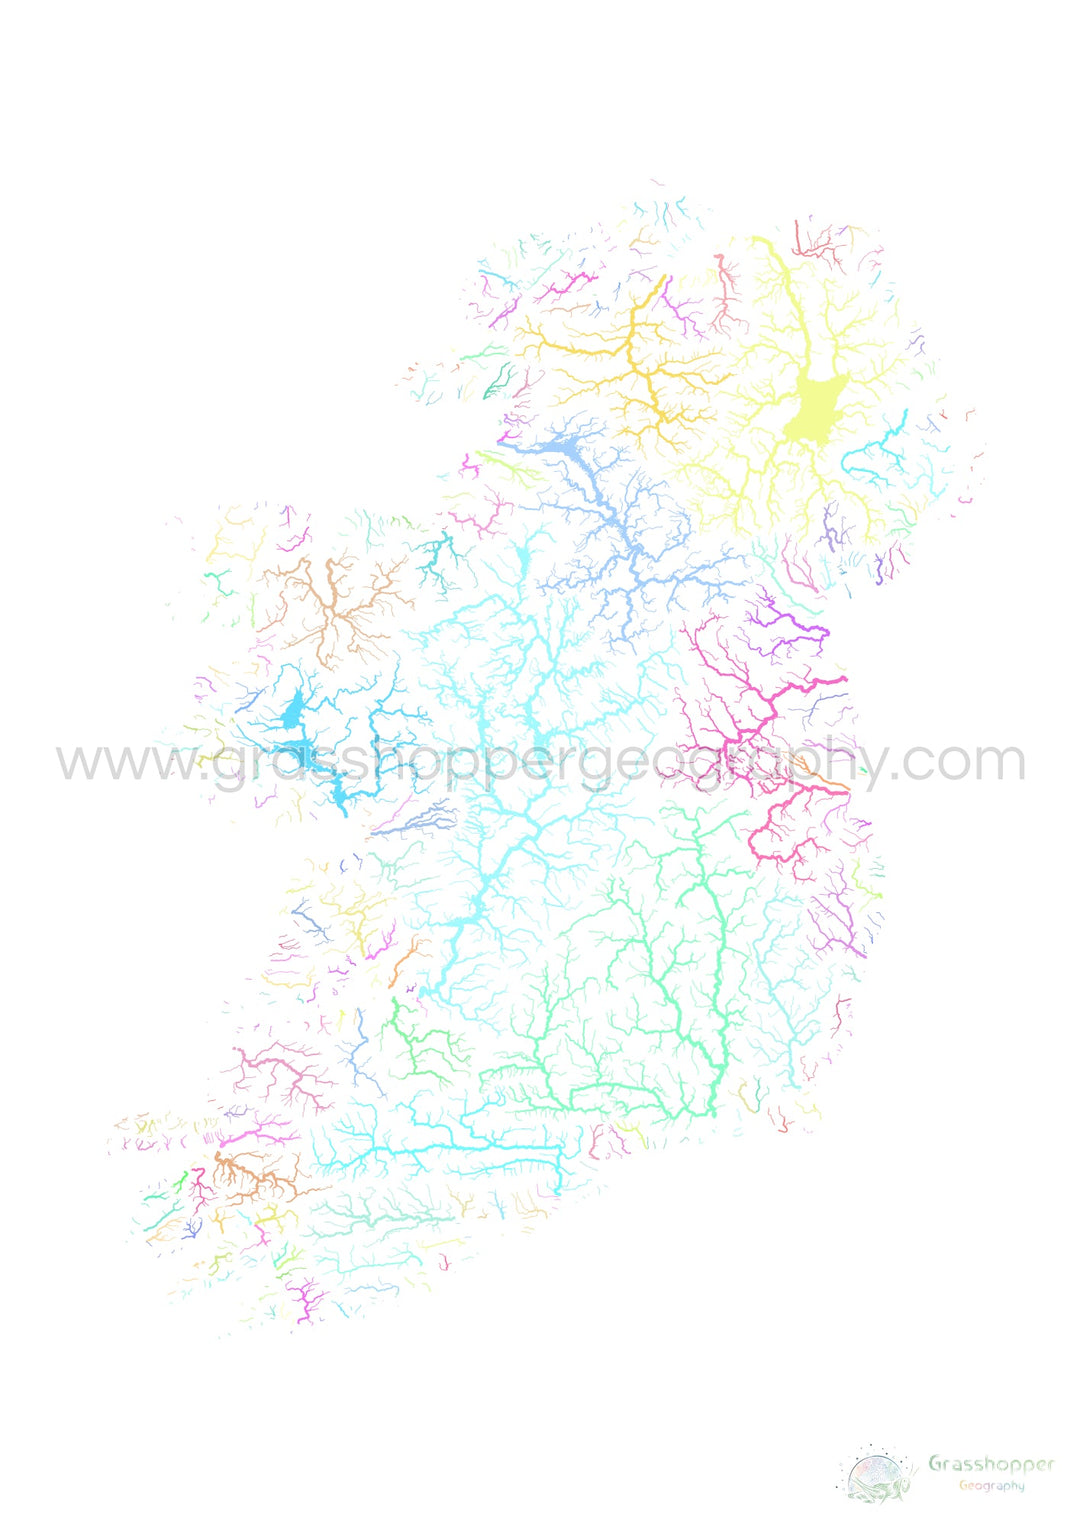 The island of Ireland - River basin map, pastel on white - Fine Art Print